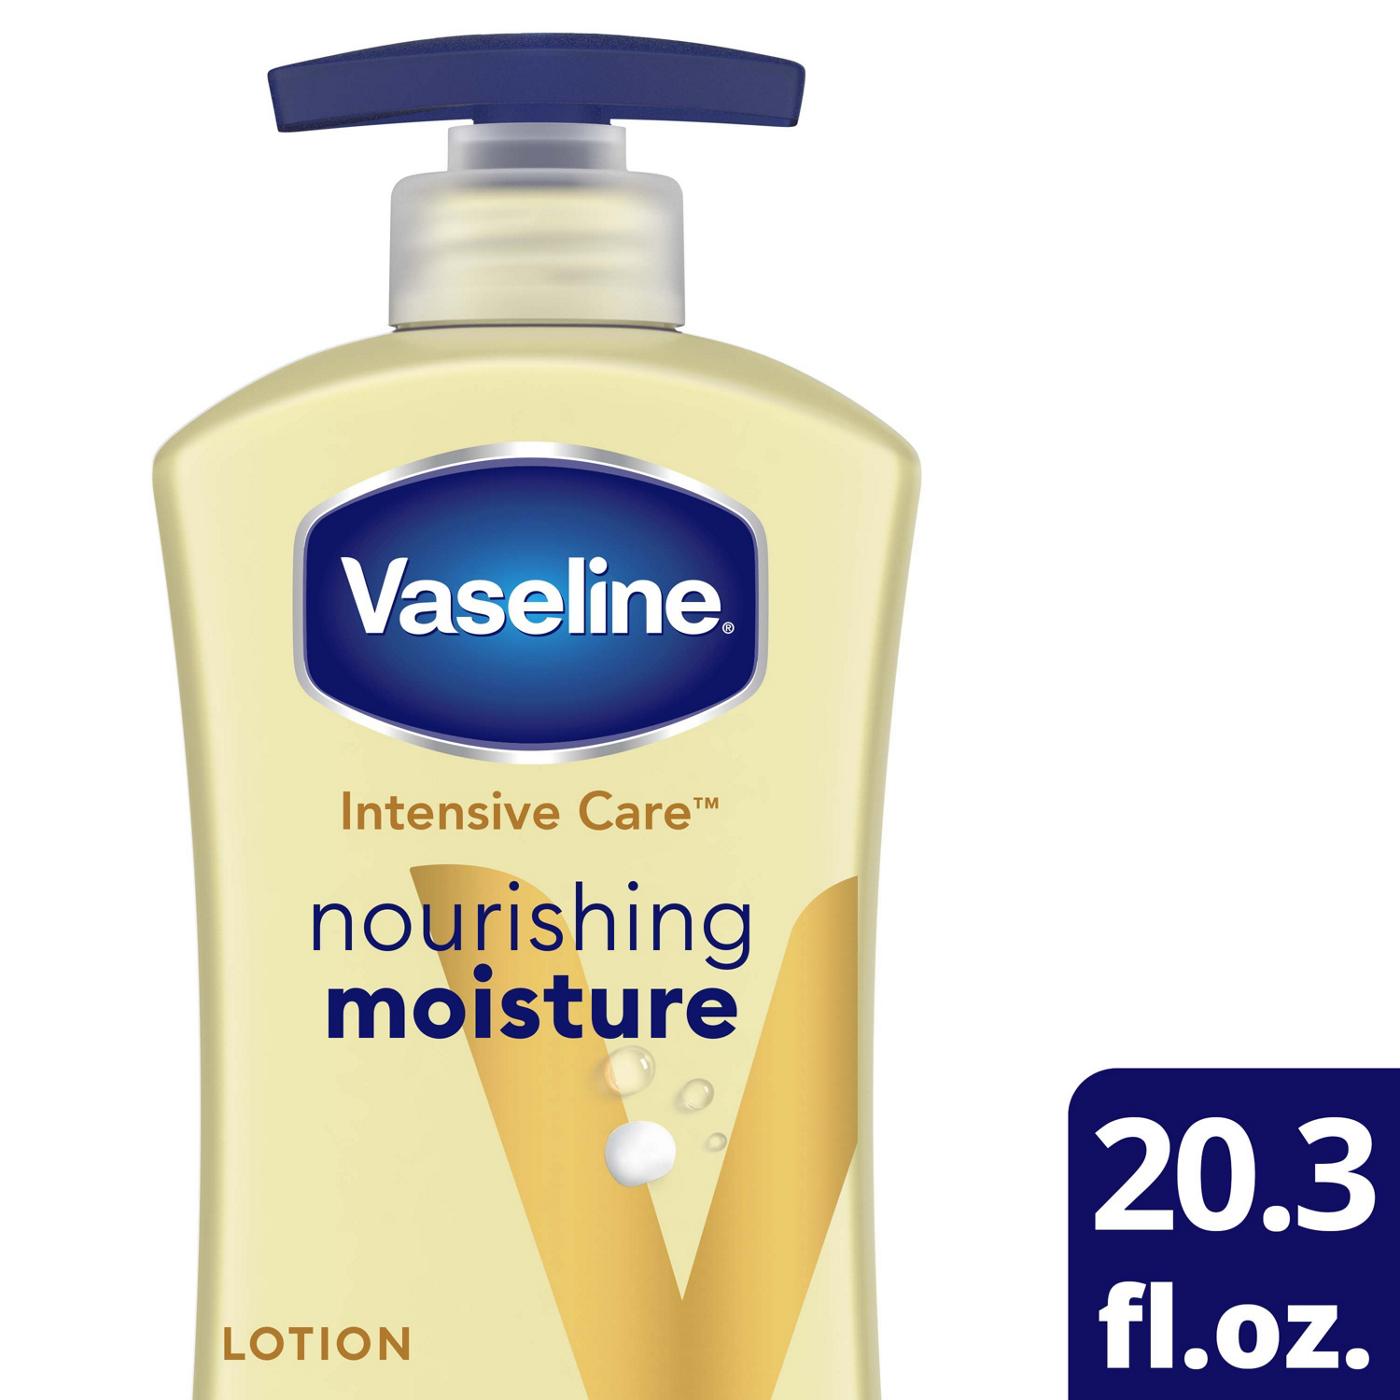 Vaseline Intensive Care Nourishing Moisture Lotion; image 6 of 10